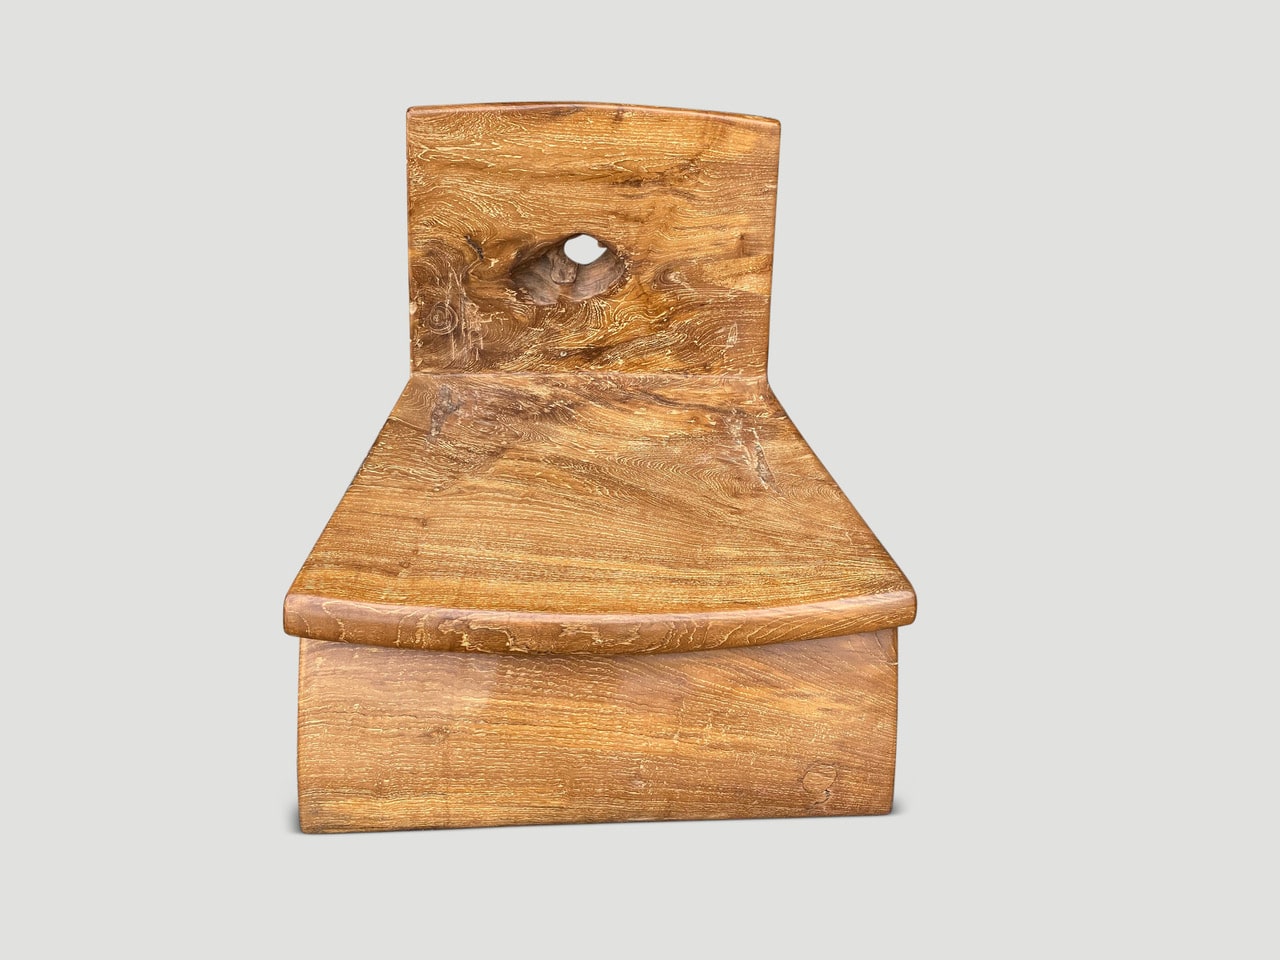 century old teak wood sculptural spa chair